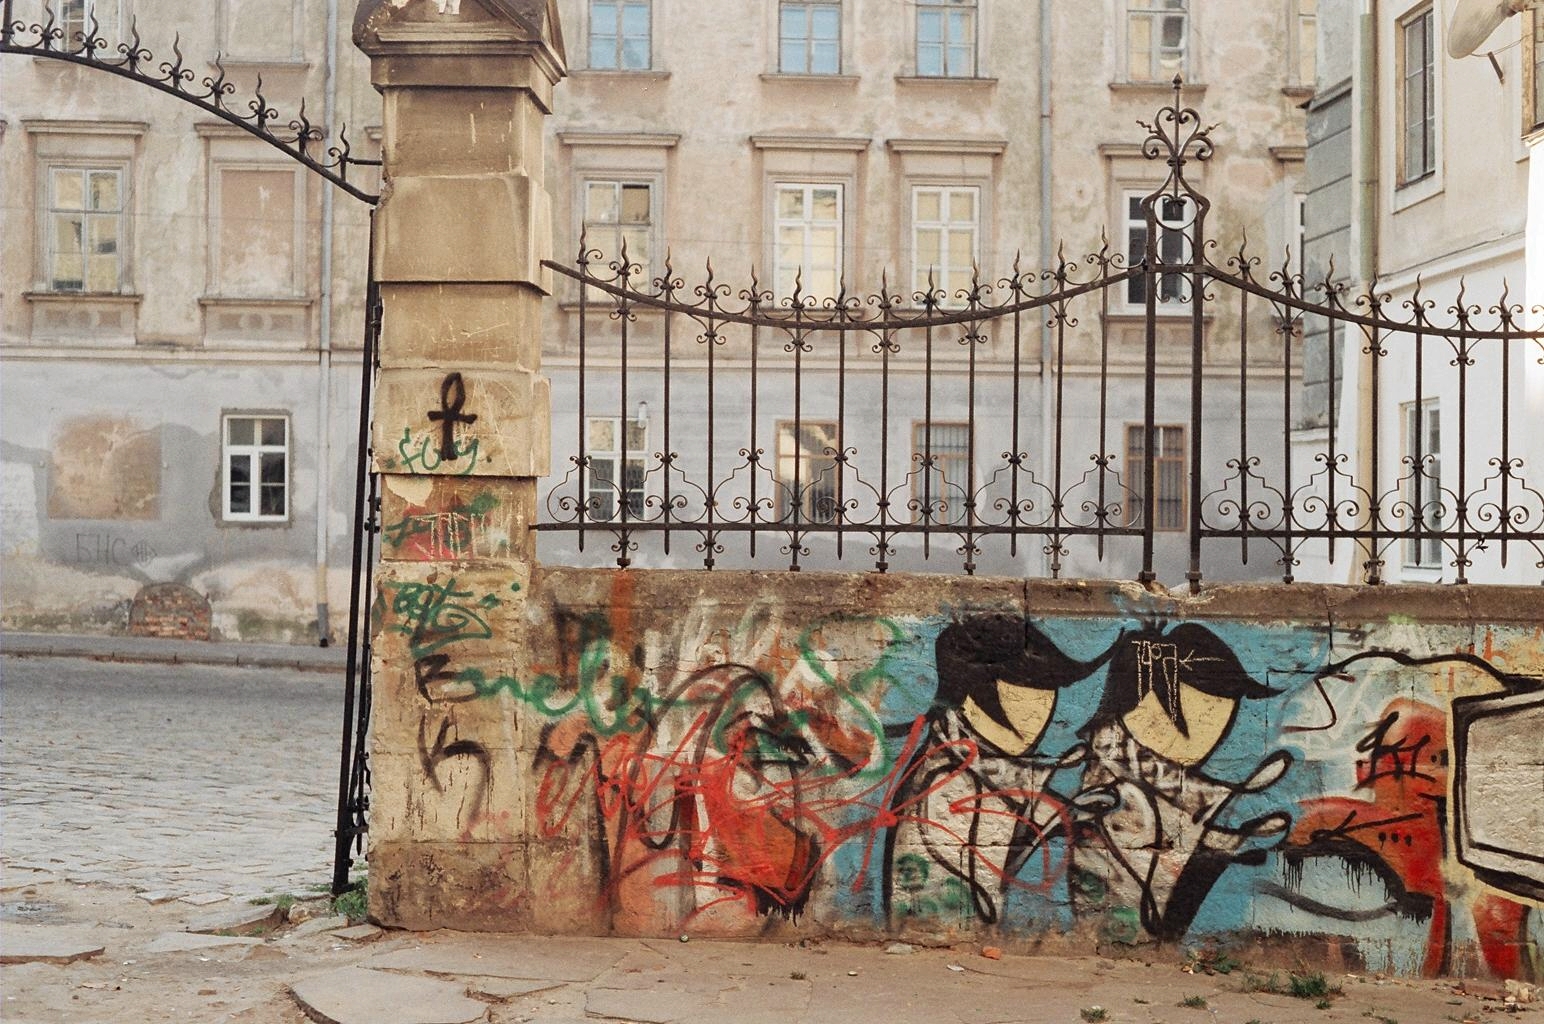 Ukrainian vandalism, Lviv style